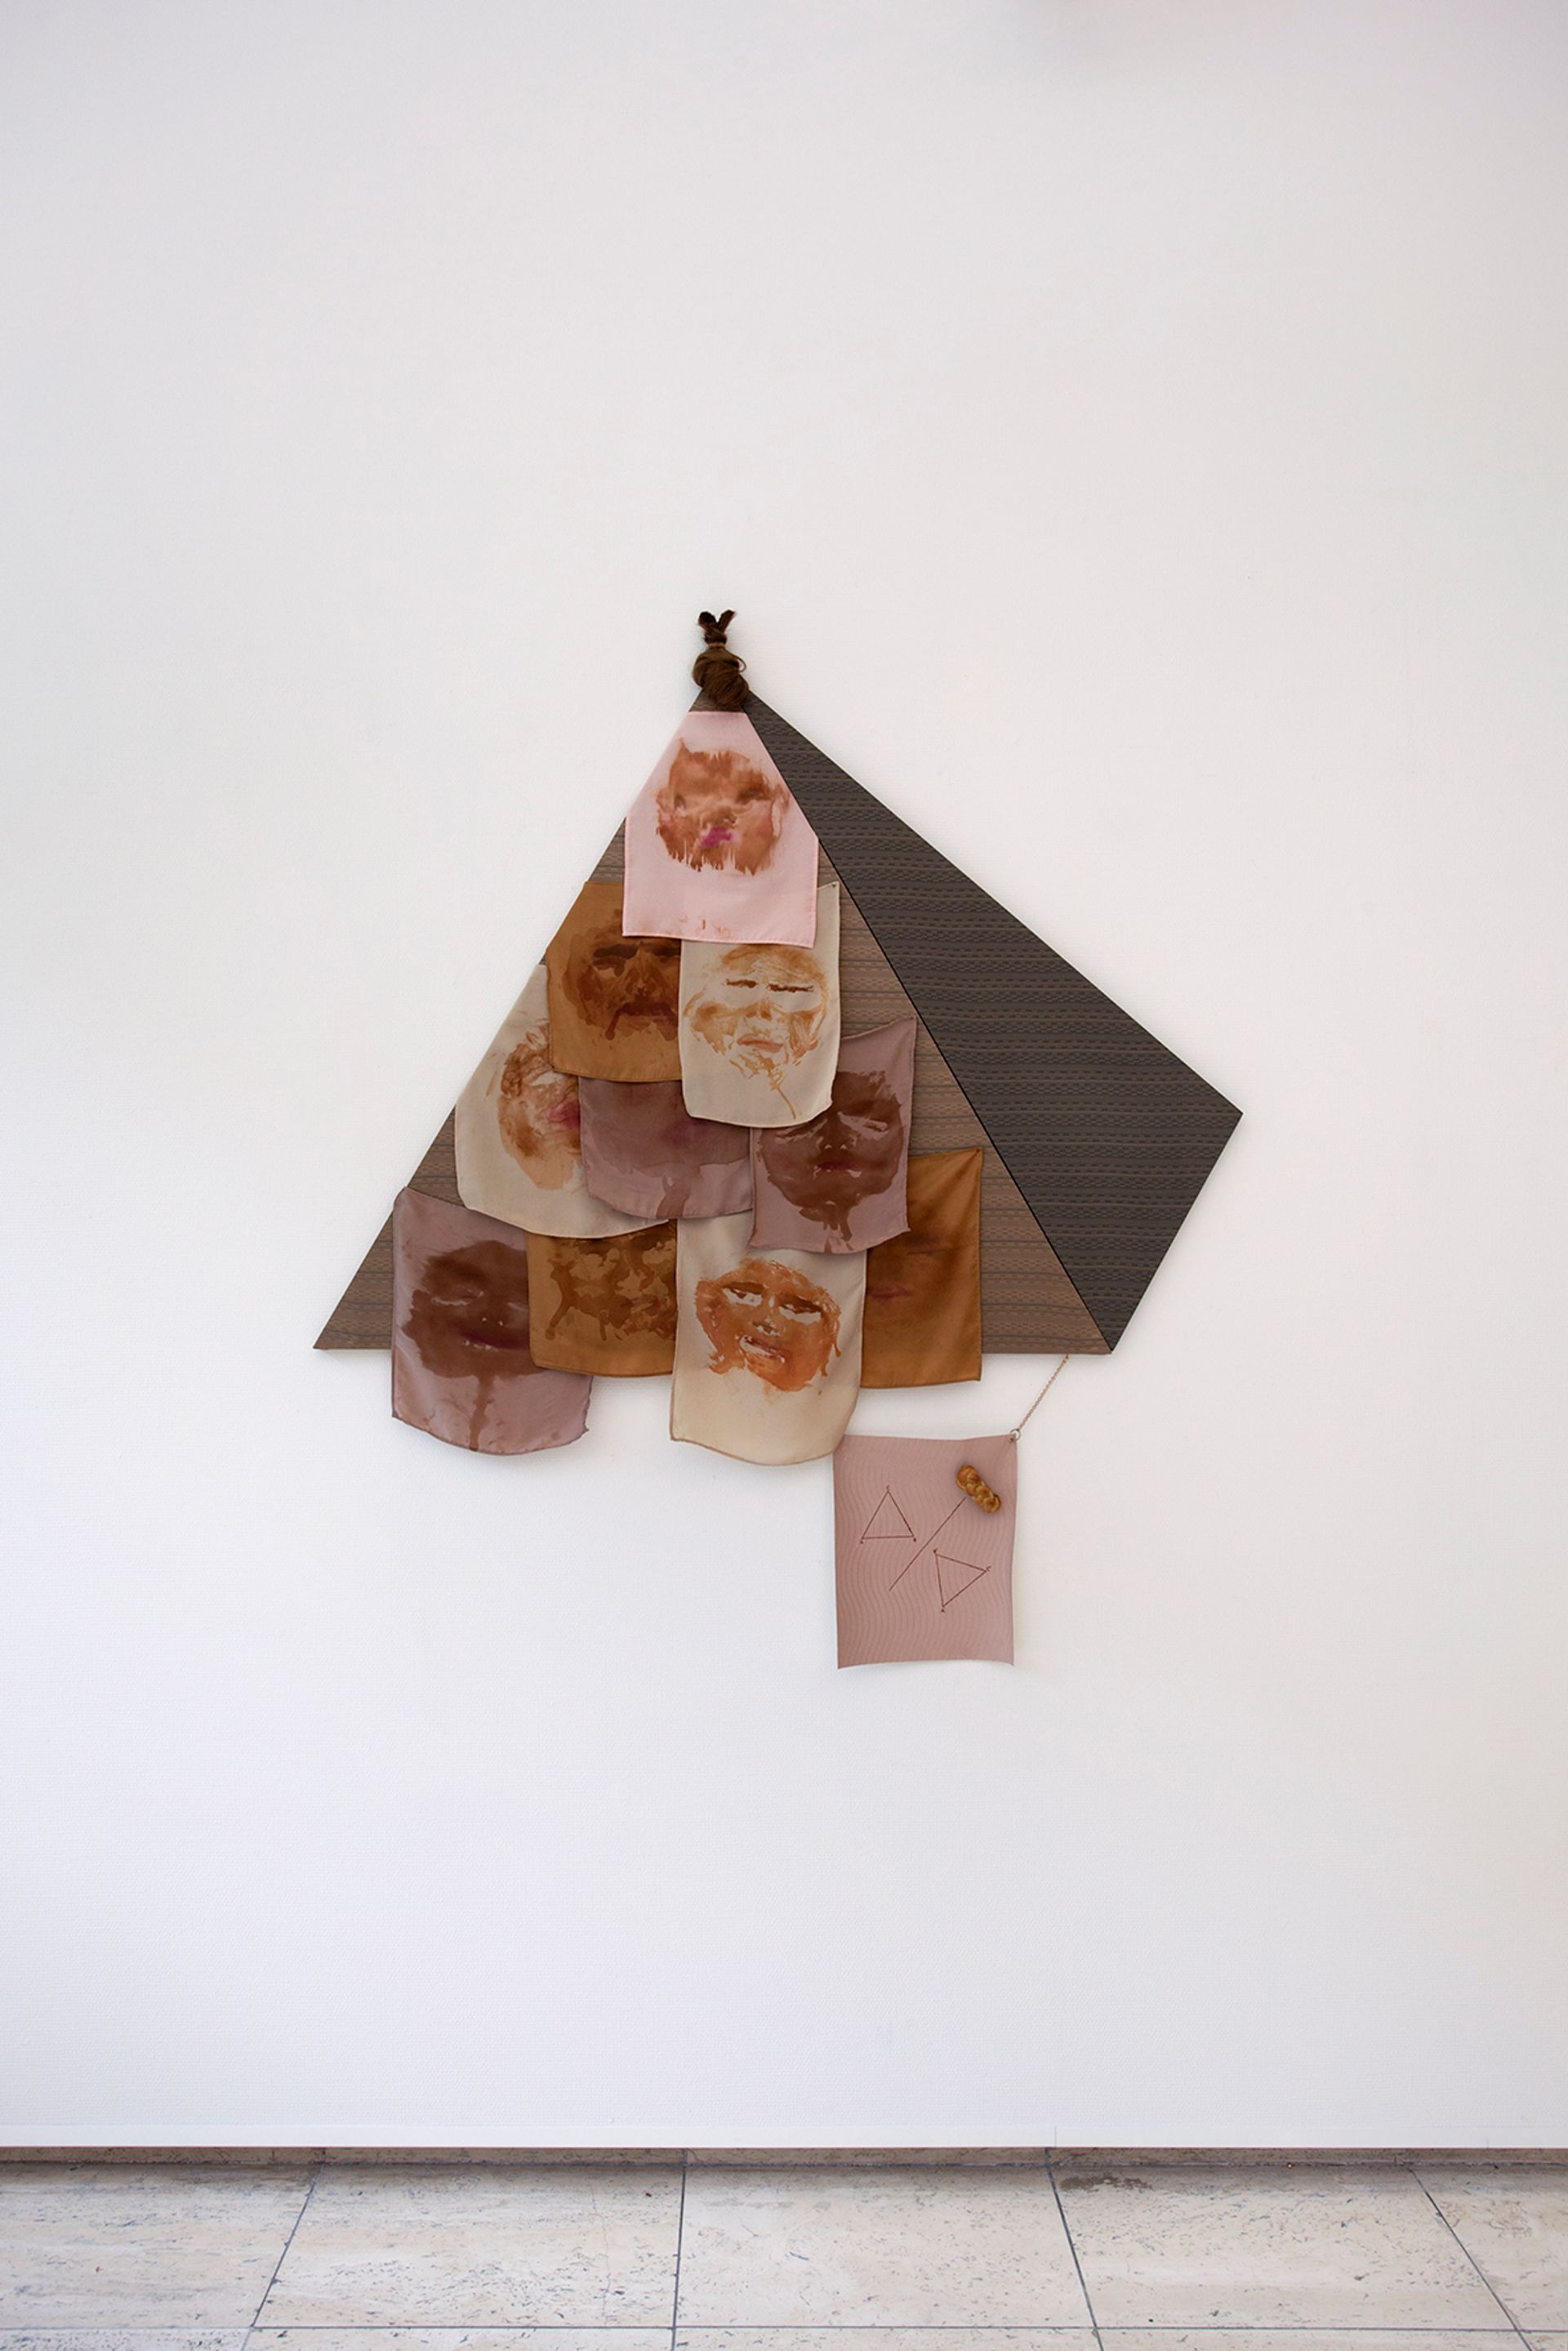 Ana Navas, Pyramide, 2018, fabric, hair, silk paint, bread, epoxy, 145 × 155 cm, photo: Otto Polman